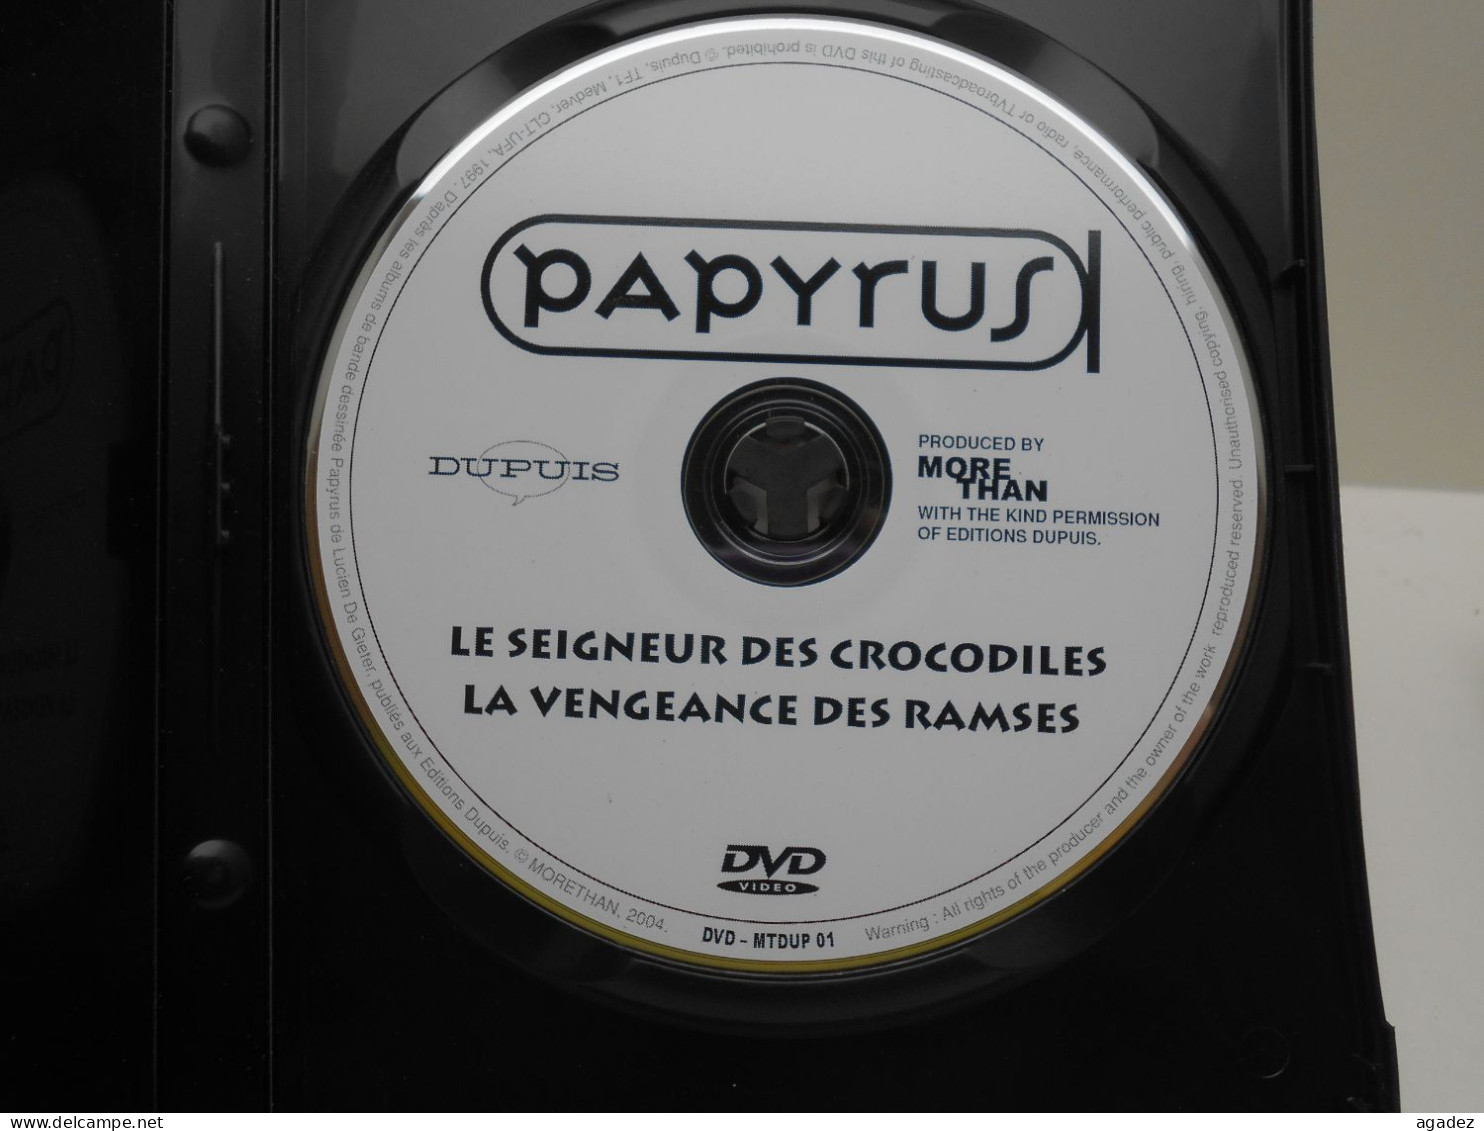 DVD Dessin Animé Papyrus - Cartoni Animati